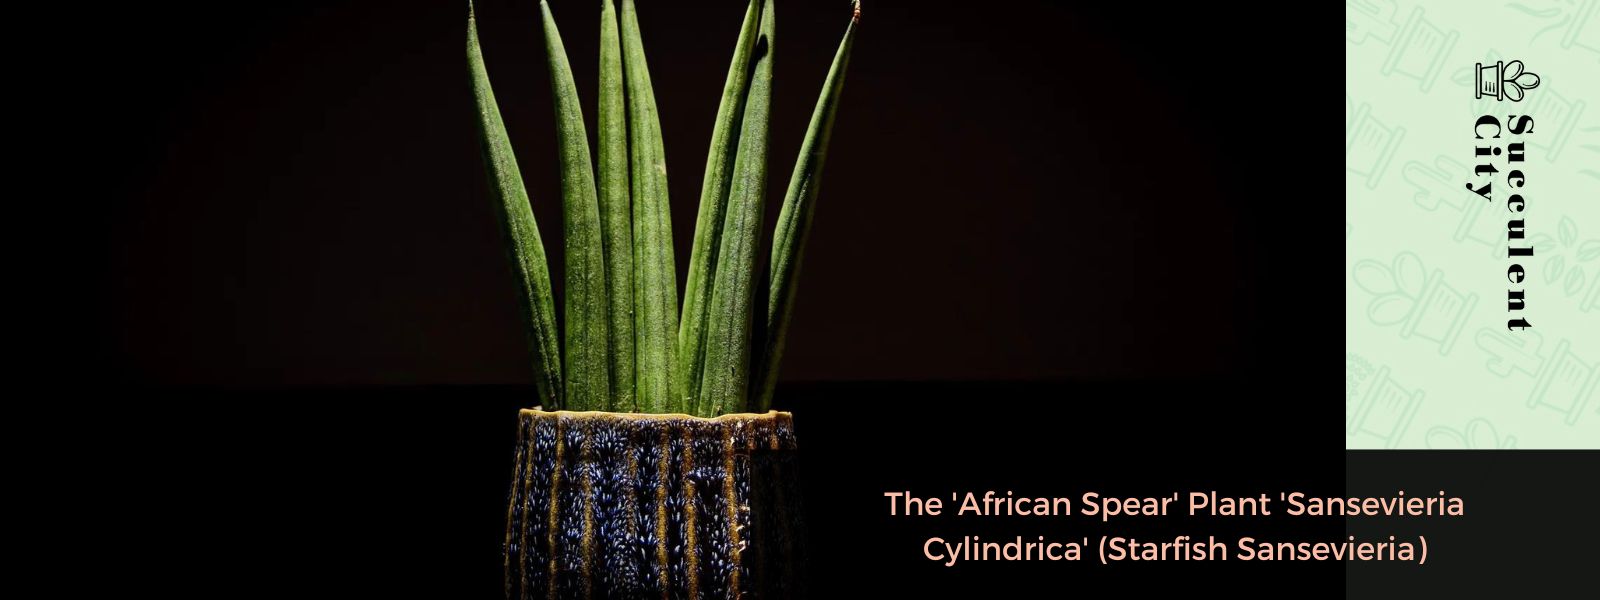 La planta “lanza africana” – Sansevieria Cylindrica (Estrella de mar Sansevieria)